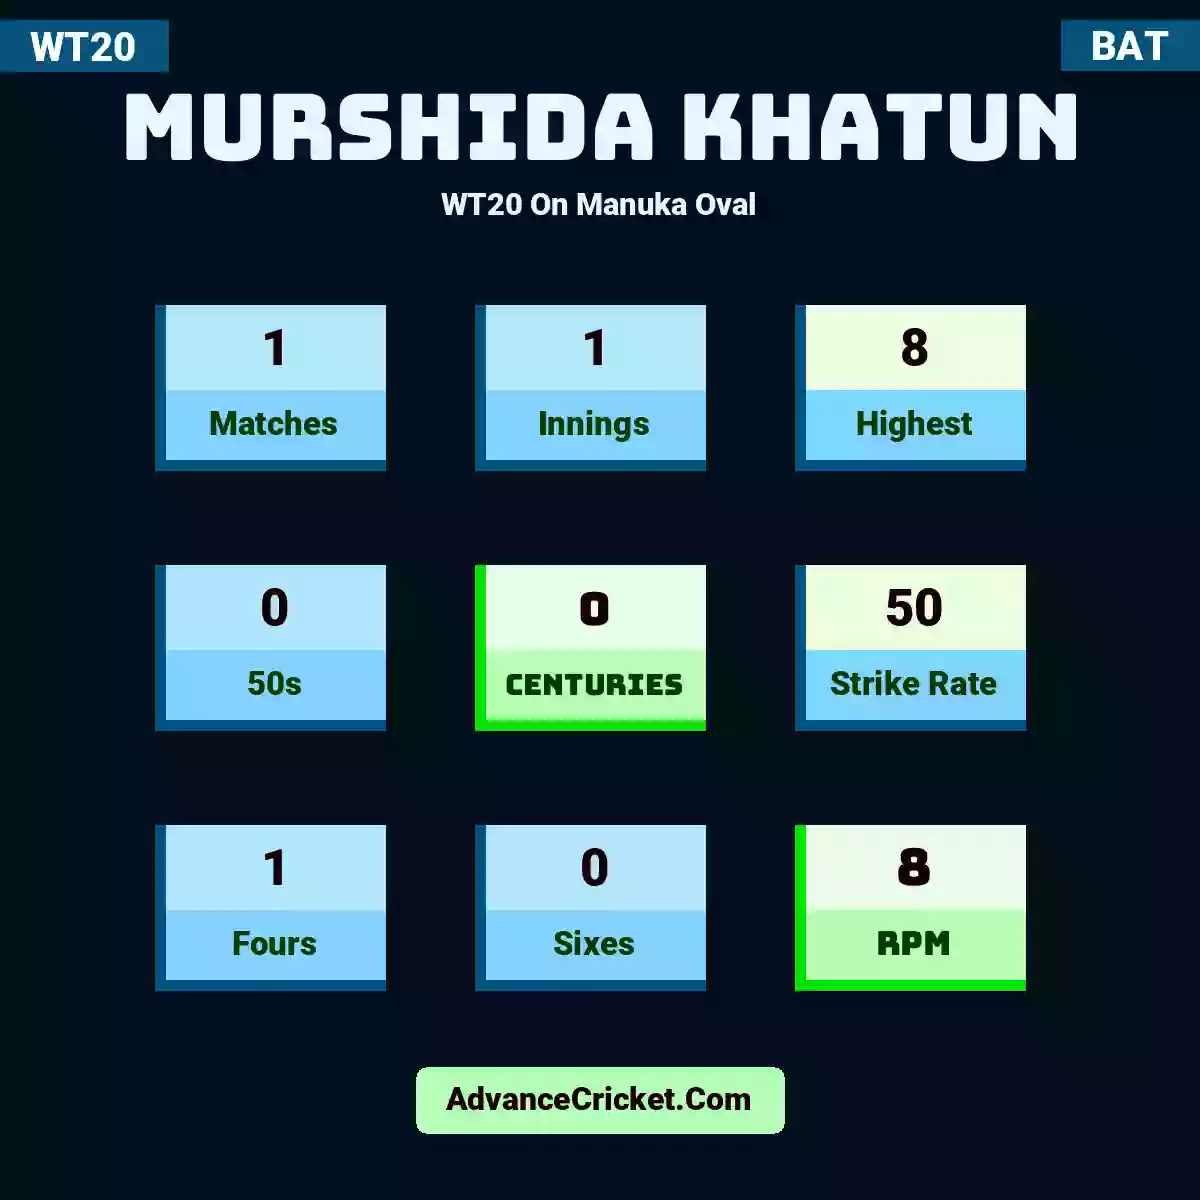 Murshida Khatun WT20  On Manuka Oval, Murshida Khatun played 1 matches, scored 8 runs as highest, 0 half-centuries, and 0 centuries, with a strike rate of 50. M.Khatun hit 1 fours and 0 sixes, with an RPM of 8.